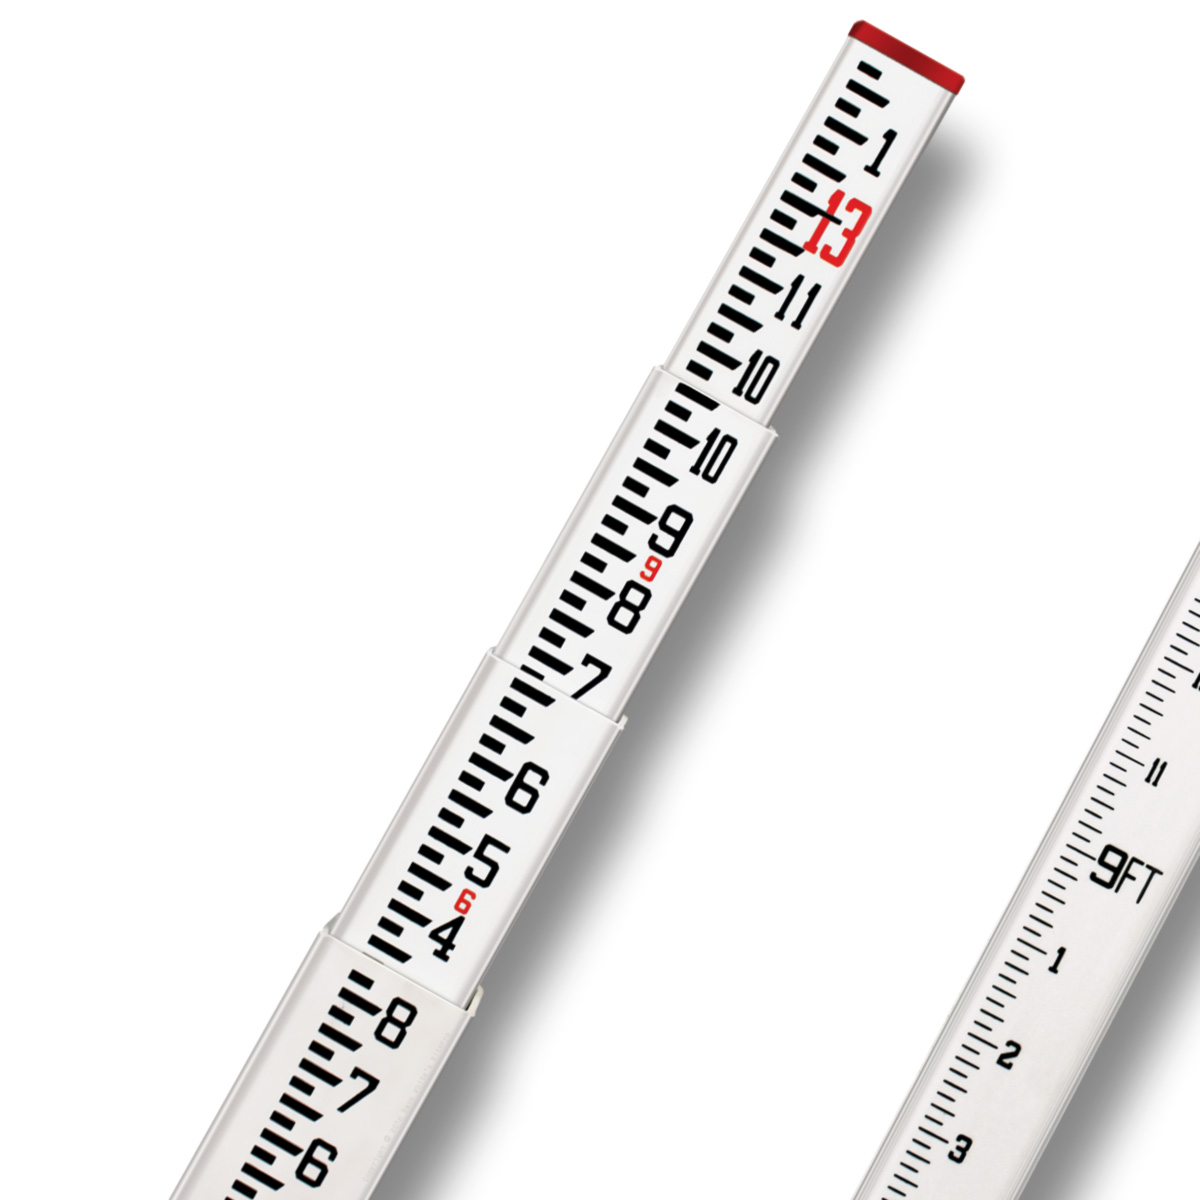 SitePro 13 Ft Inches Fiberglass Leveling Rod (CR-type) 11-913-C